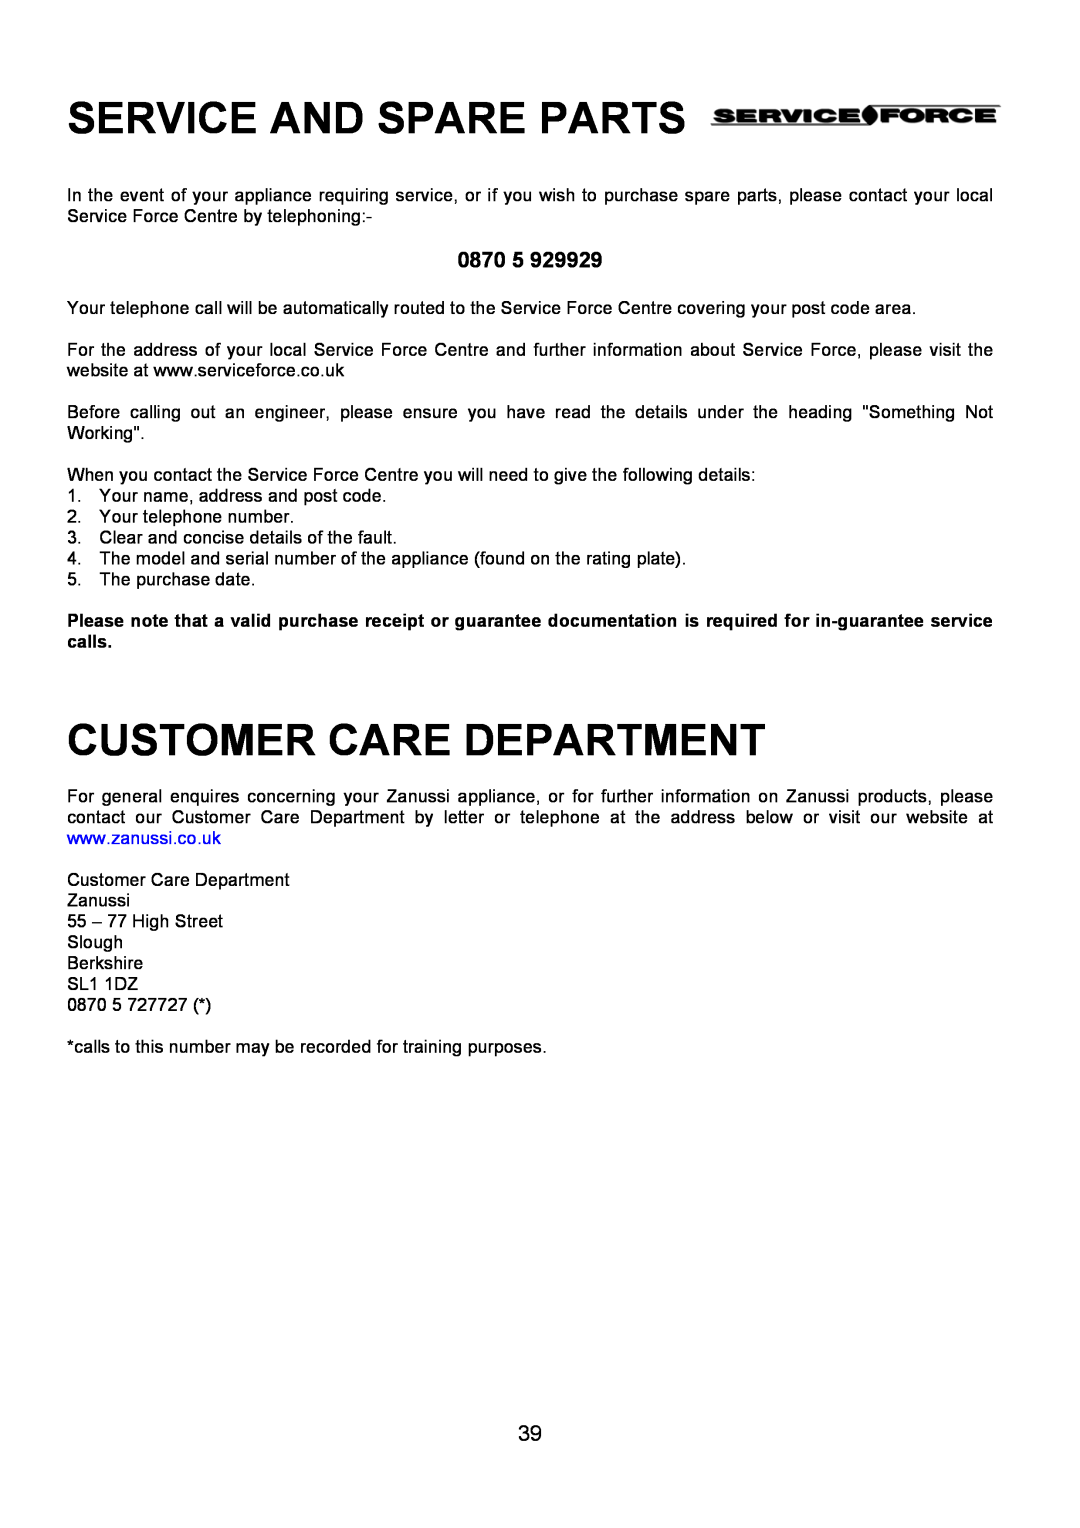 Zanussi ZDQ 695 manual 0870 5, Service And Spare Parts, Customer Care Department 